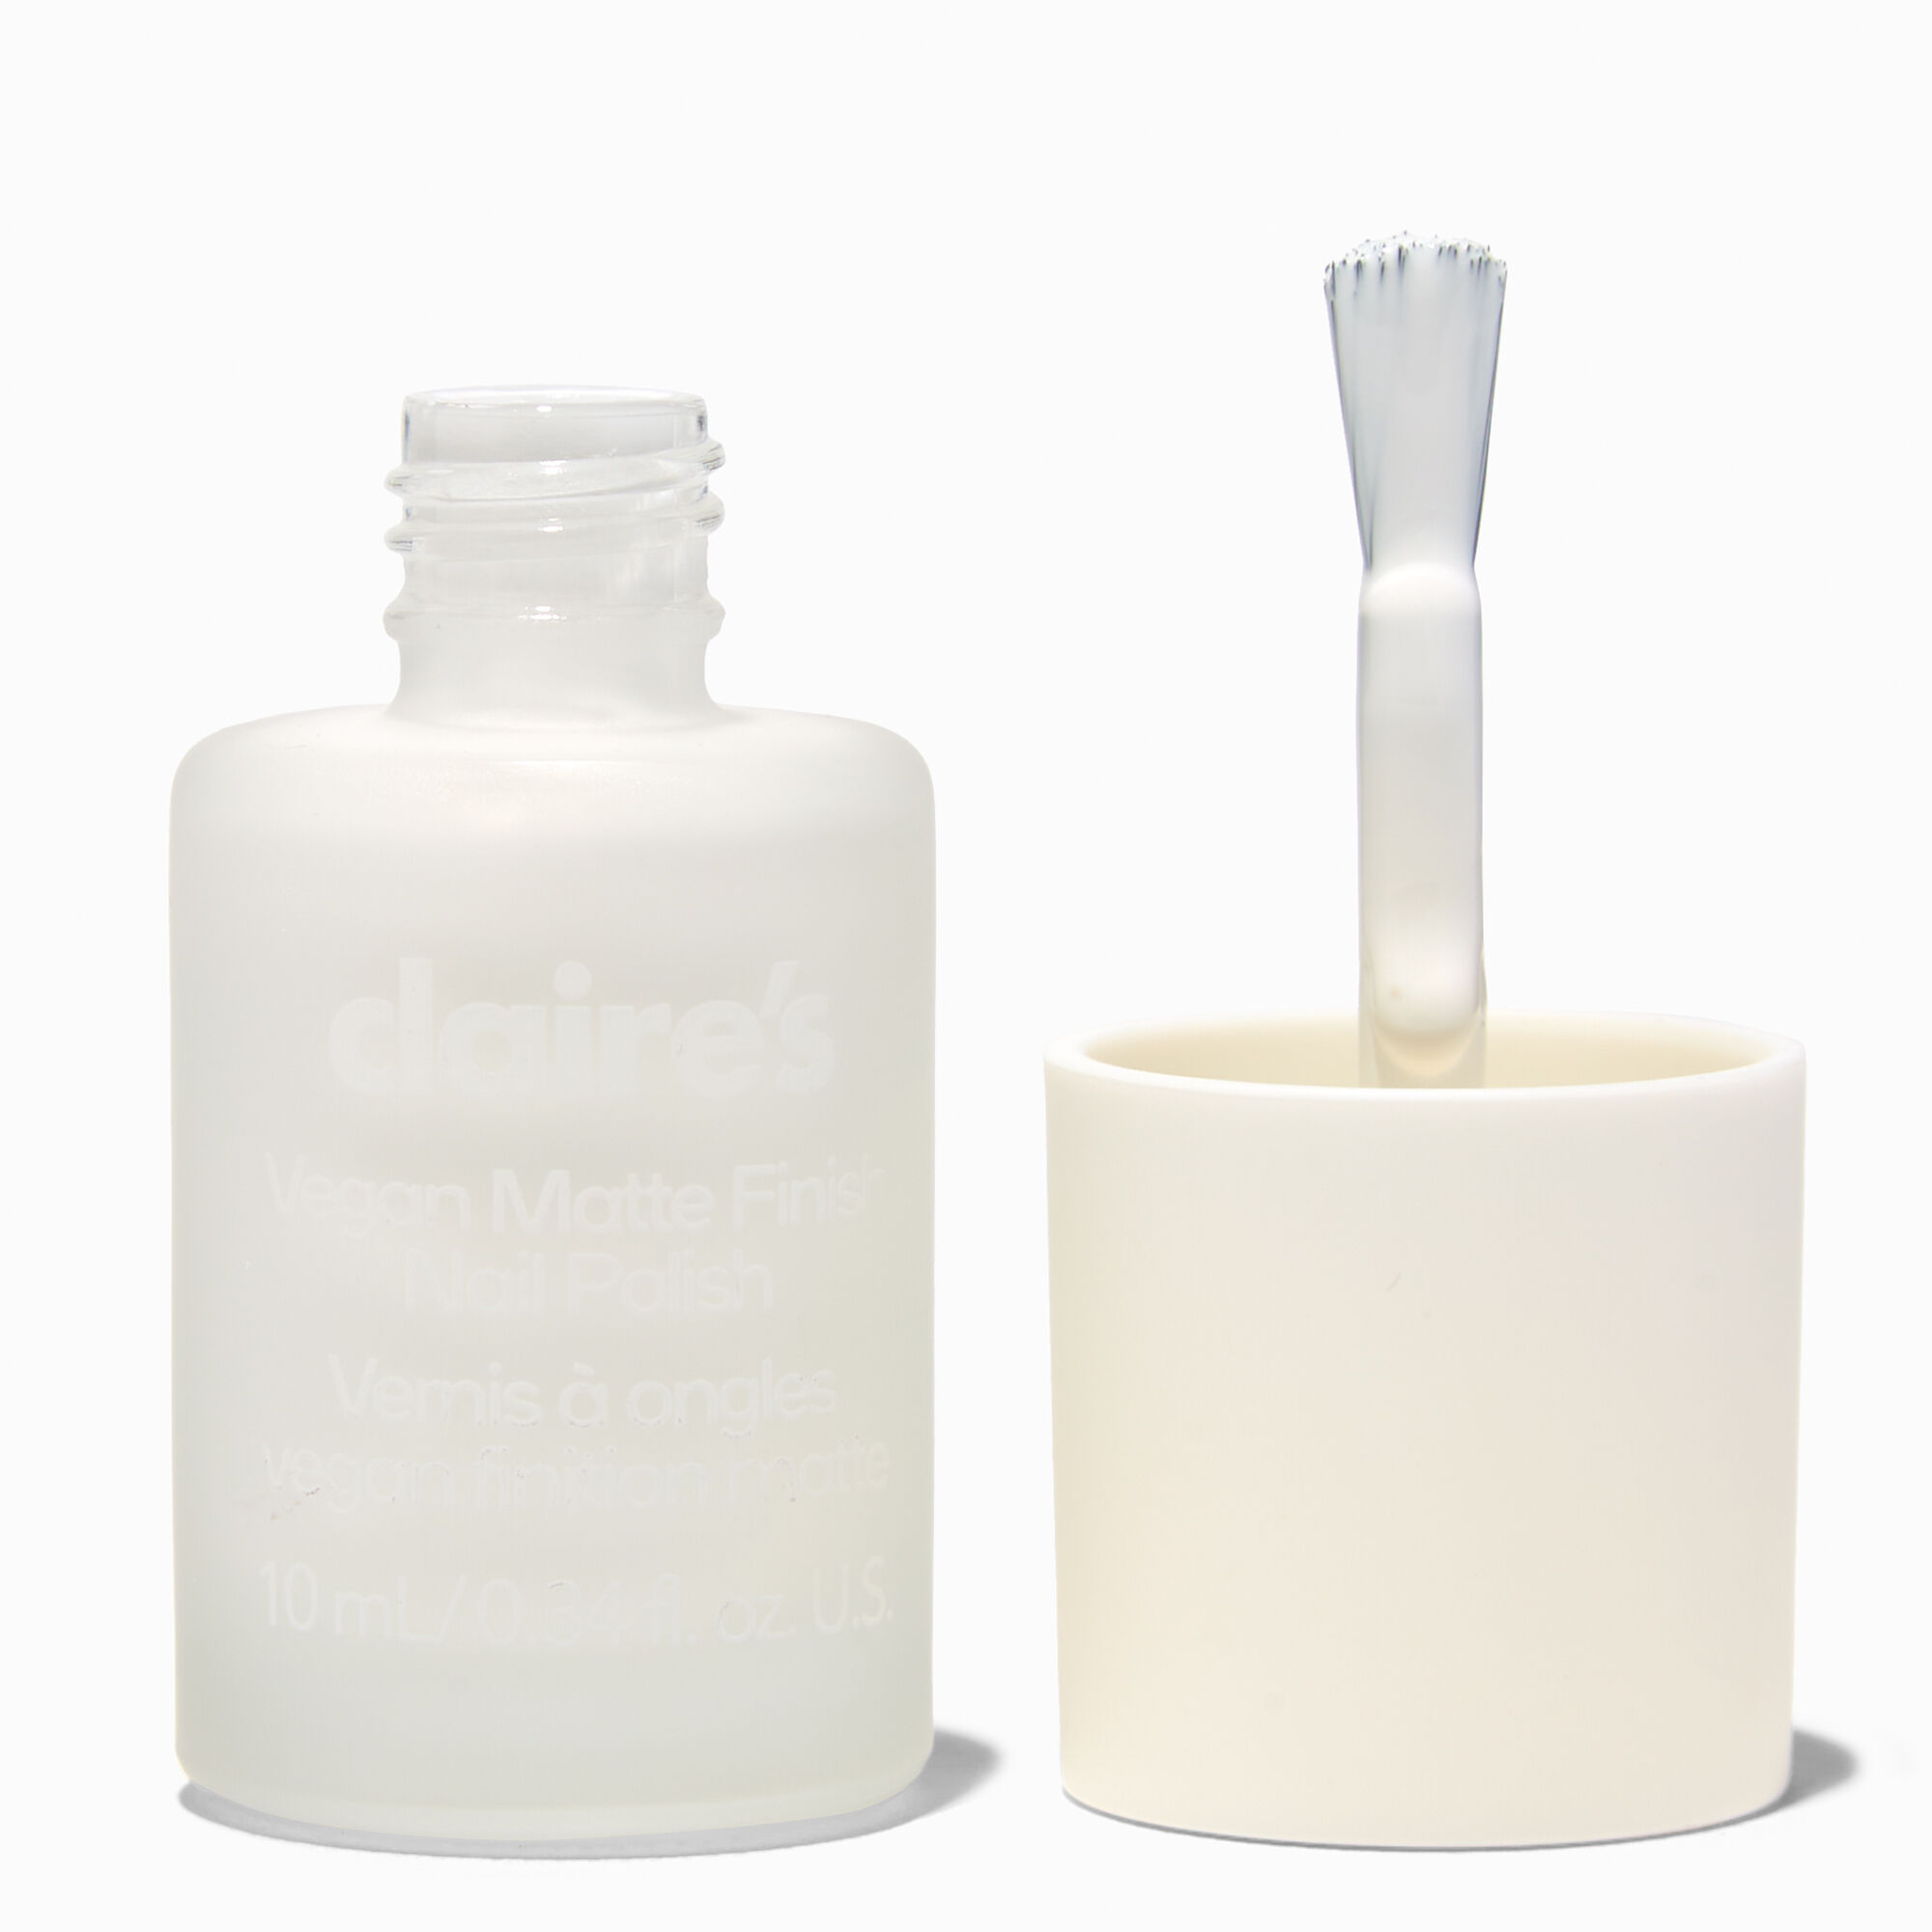 BORN PRETTY Milky Jelly White Gel Nail Polish 10ml Soak Off UV LED Nail  Varnish | eBay